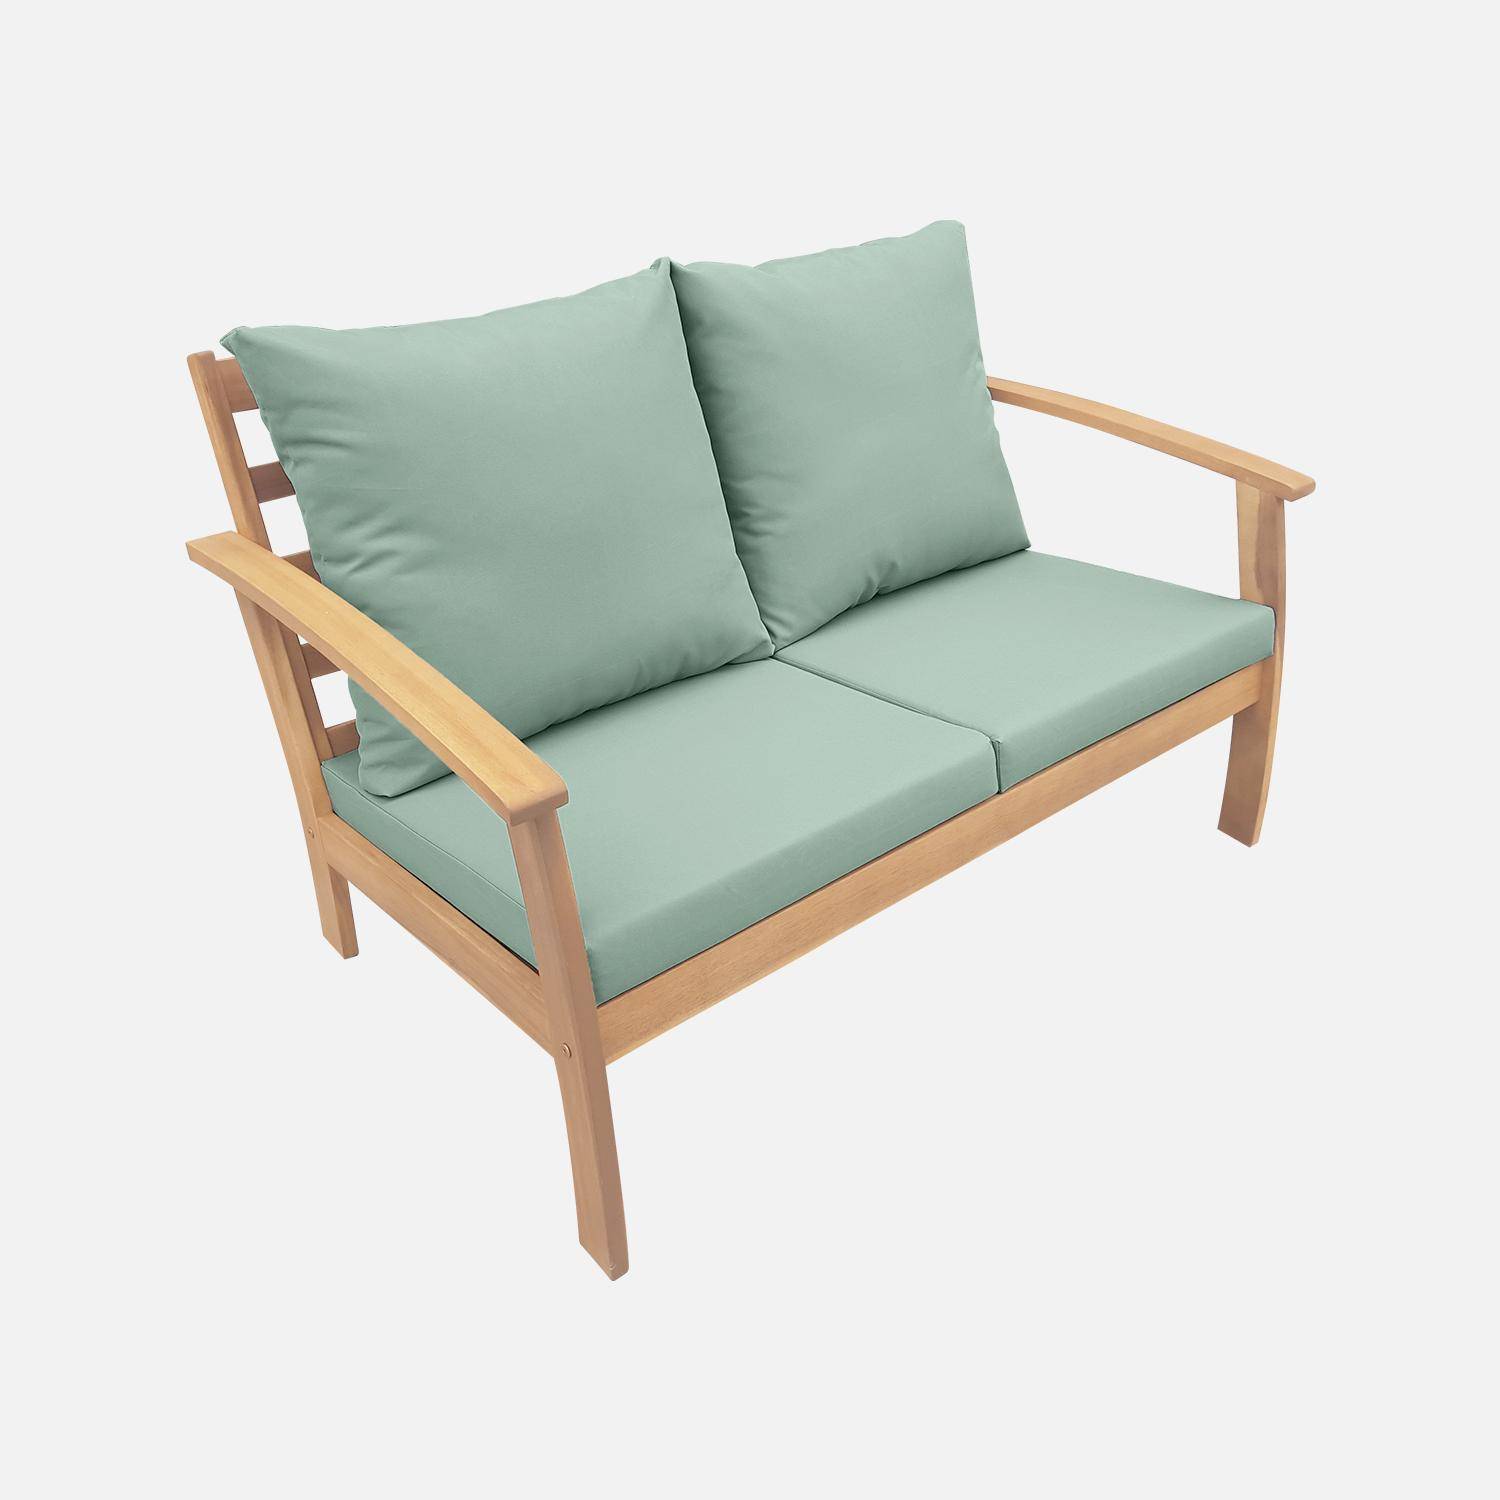 4-seater wooden garden sofa - Acacia wood sofa, armchairs and coffee table, designer piece  - Ushuaia - Sage green,sweeek,Photo3